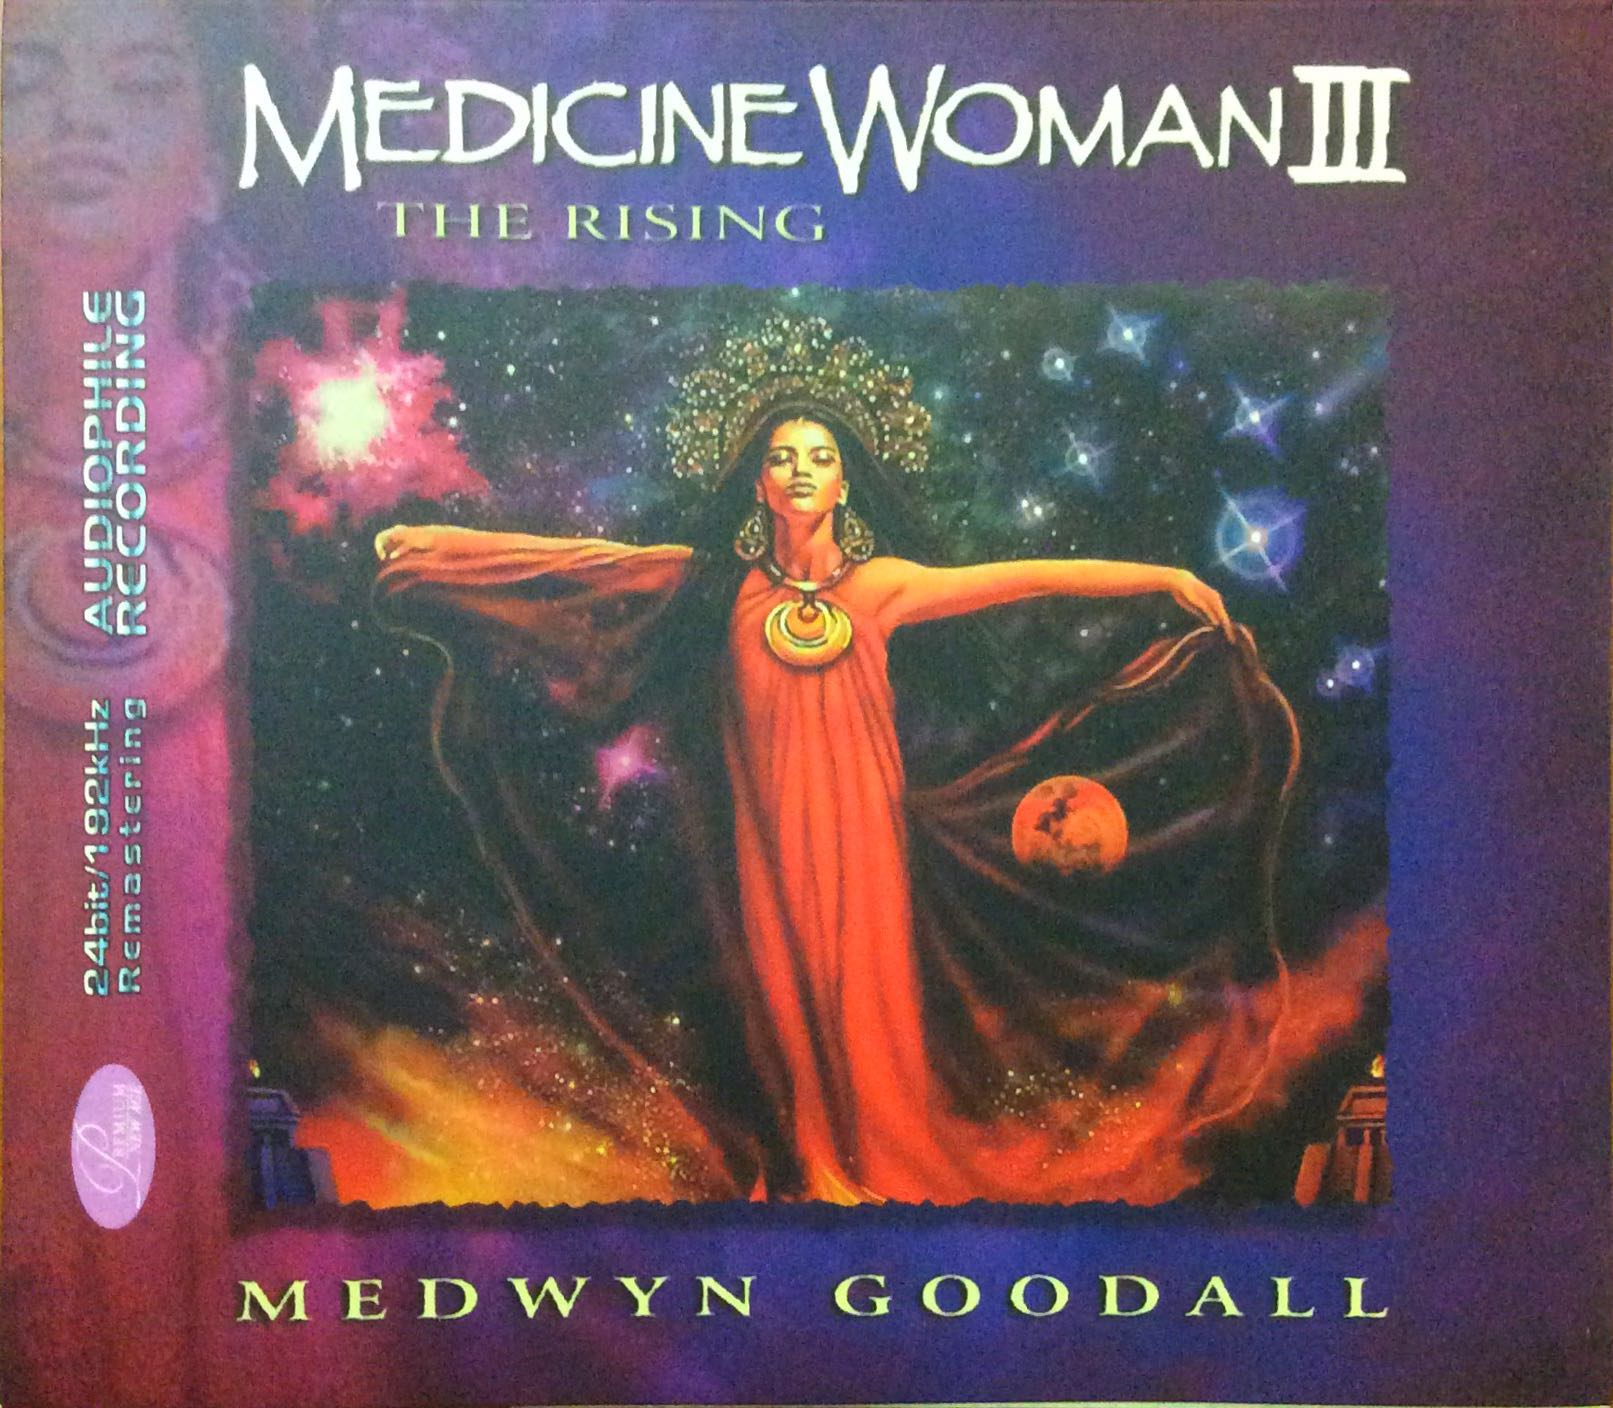 Medwyn Goodall - MEDICINE WOMAN III - The Rising 24bit 192kHz Remastering Audiophile CD